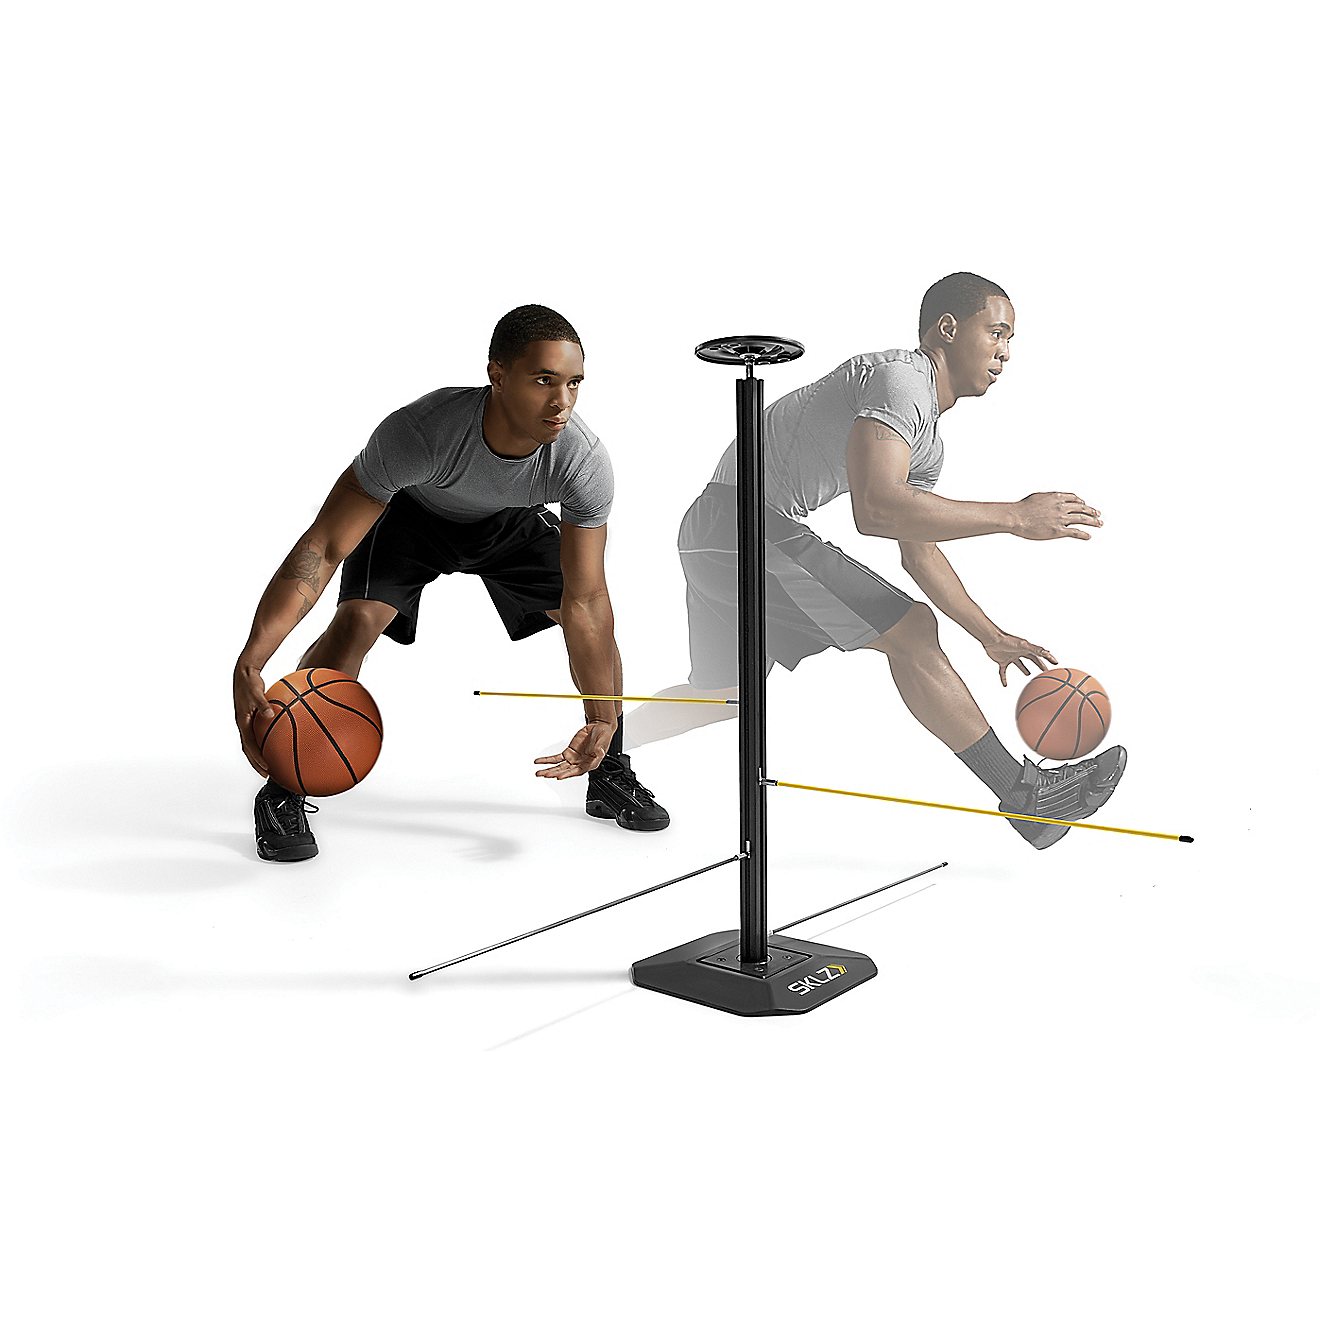 Portable Basketball Fitness Training Sticks DTT Dribble Stick Height Adjustable Dribble Trainer Professional Dribble Teaching Equipment for Perfect Dribbling Skills 